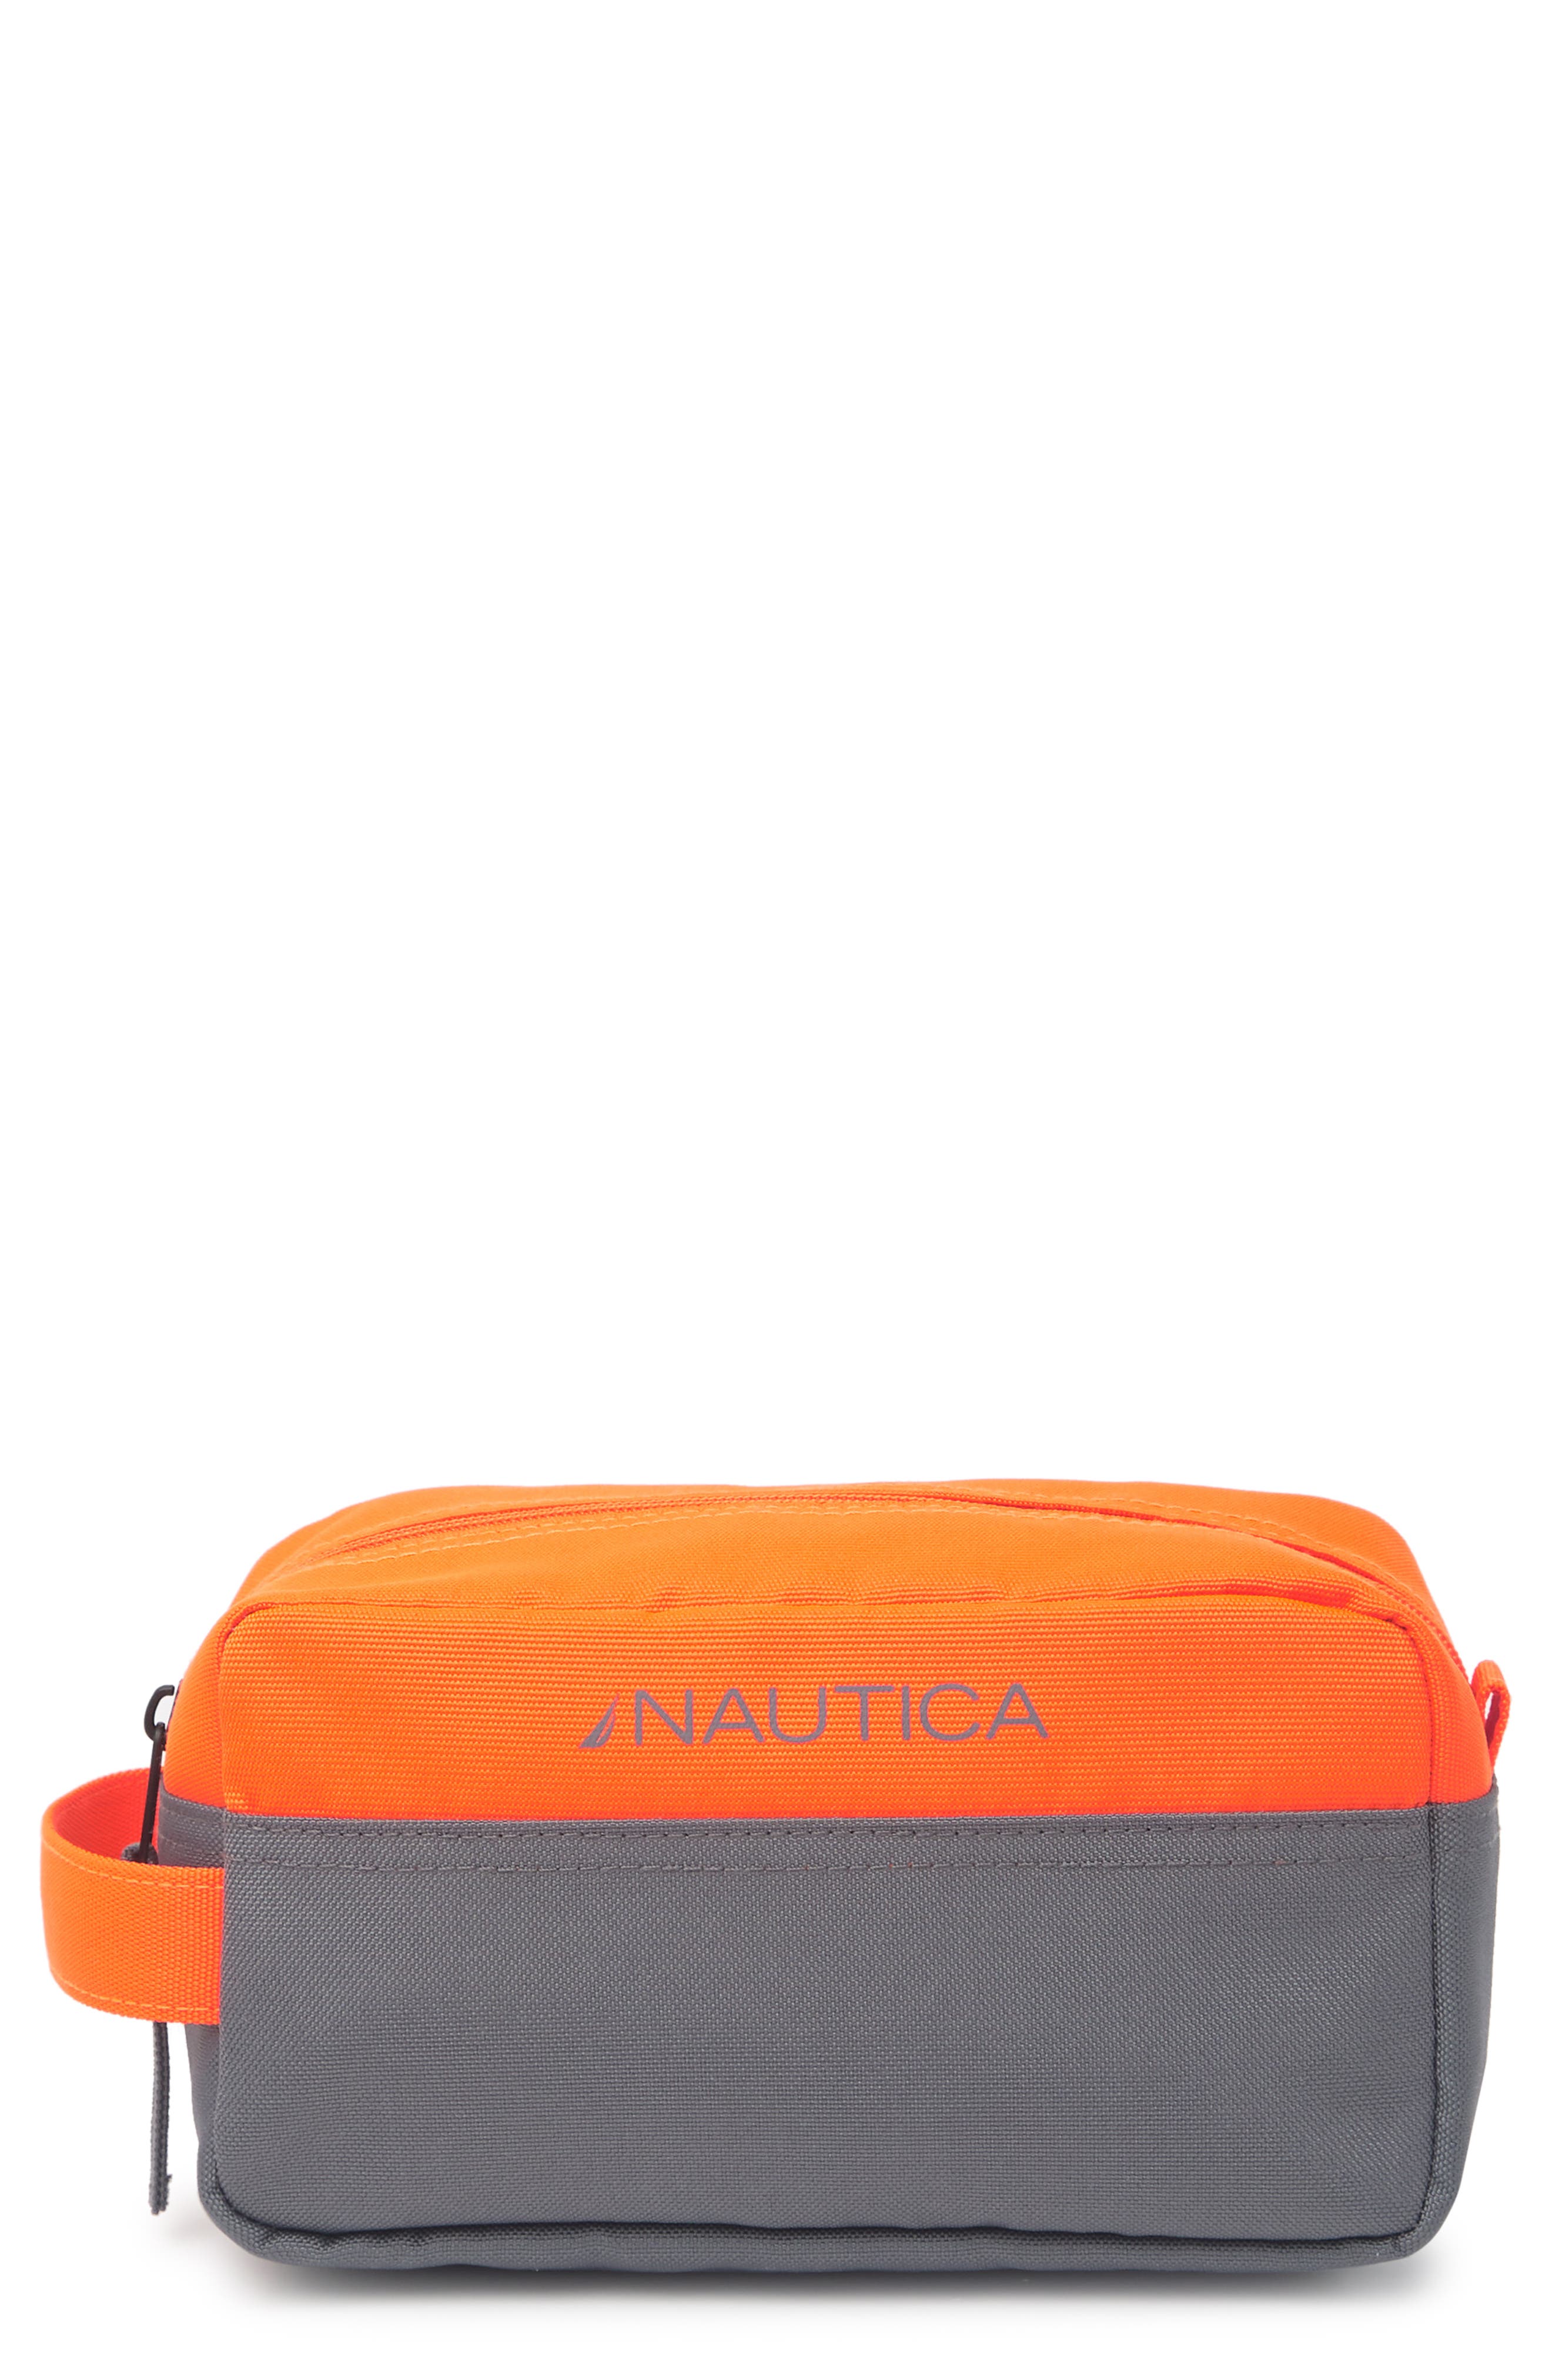 Nautica Pop Top Travel Kit In Orange